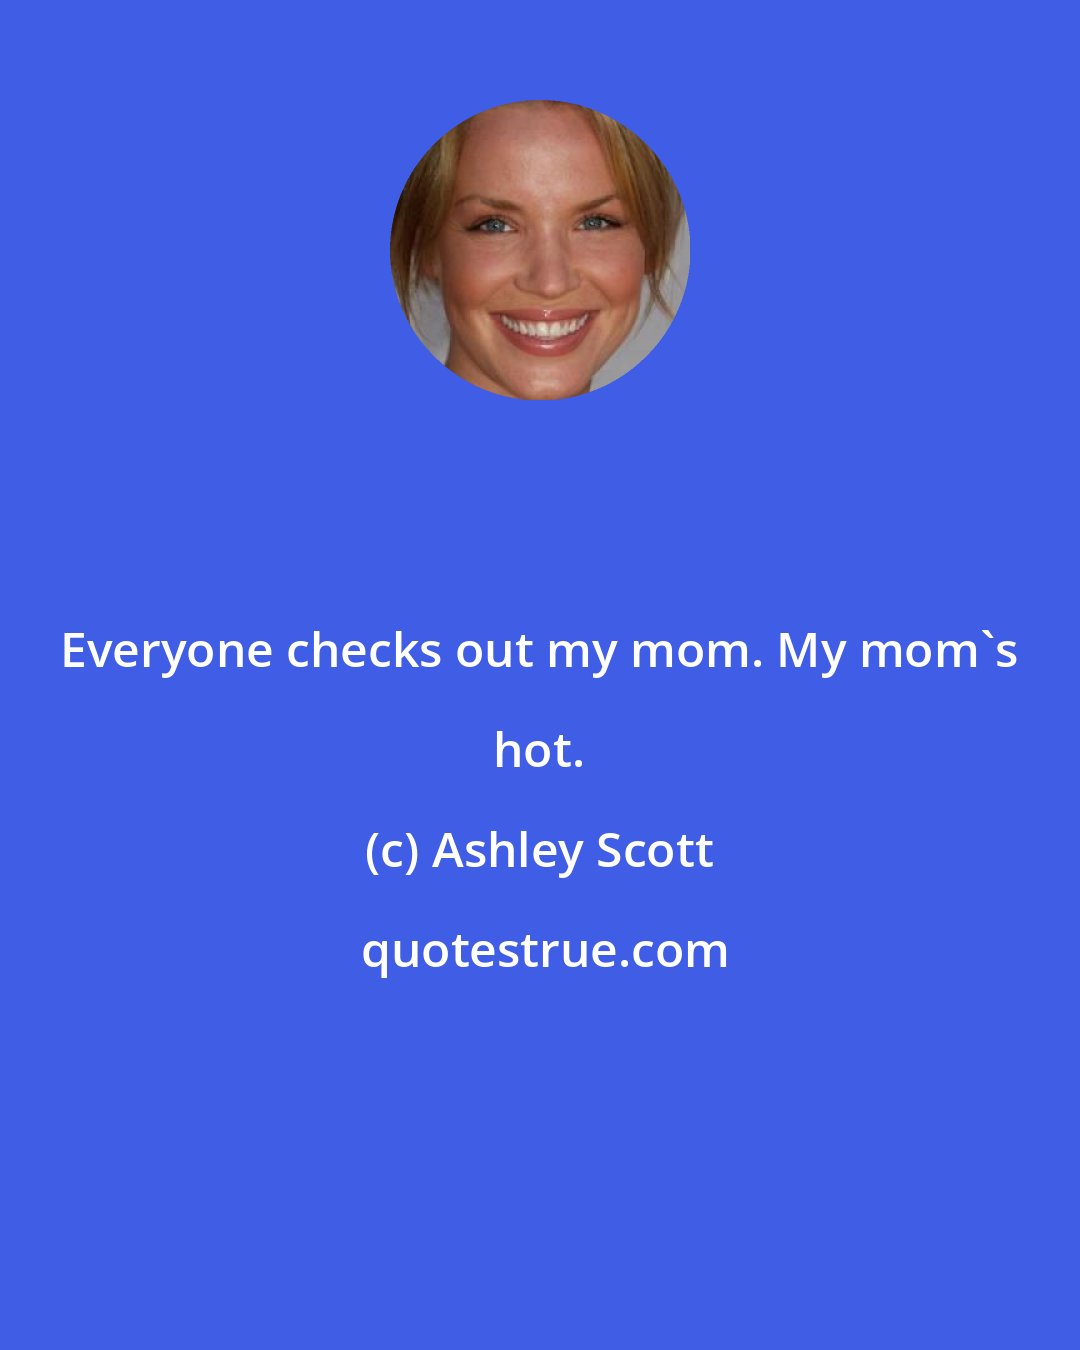 Ashley Scott: Everyone checks out my mom. My mom's hot.